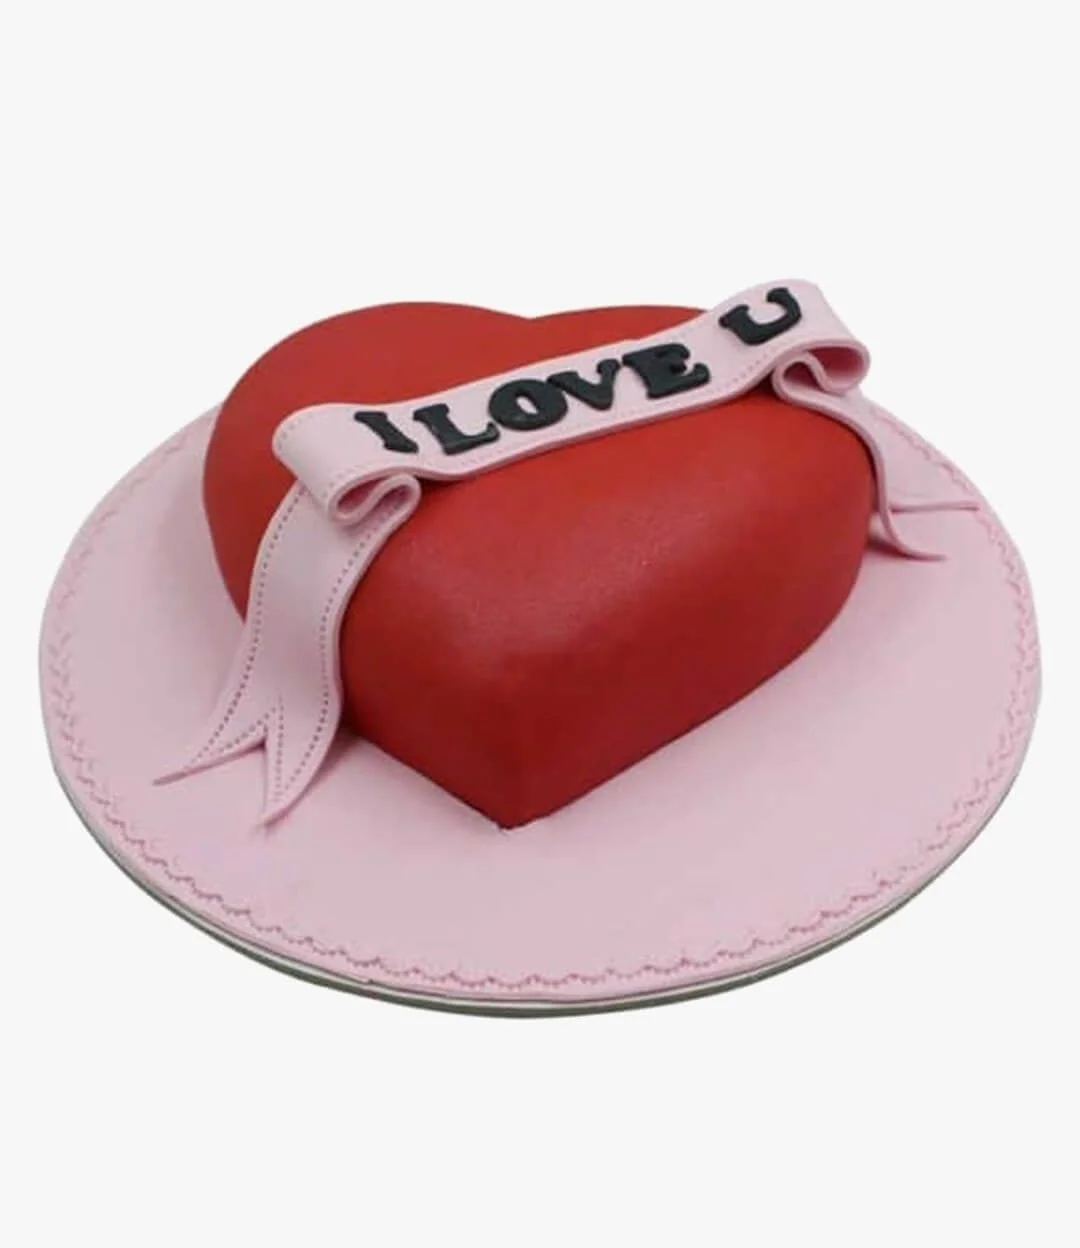 I Love You Cake 